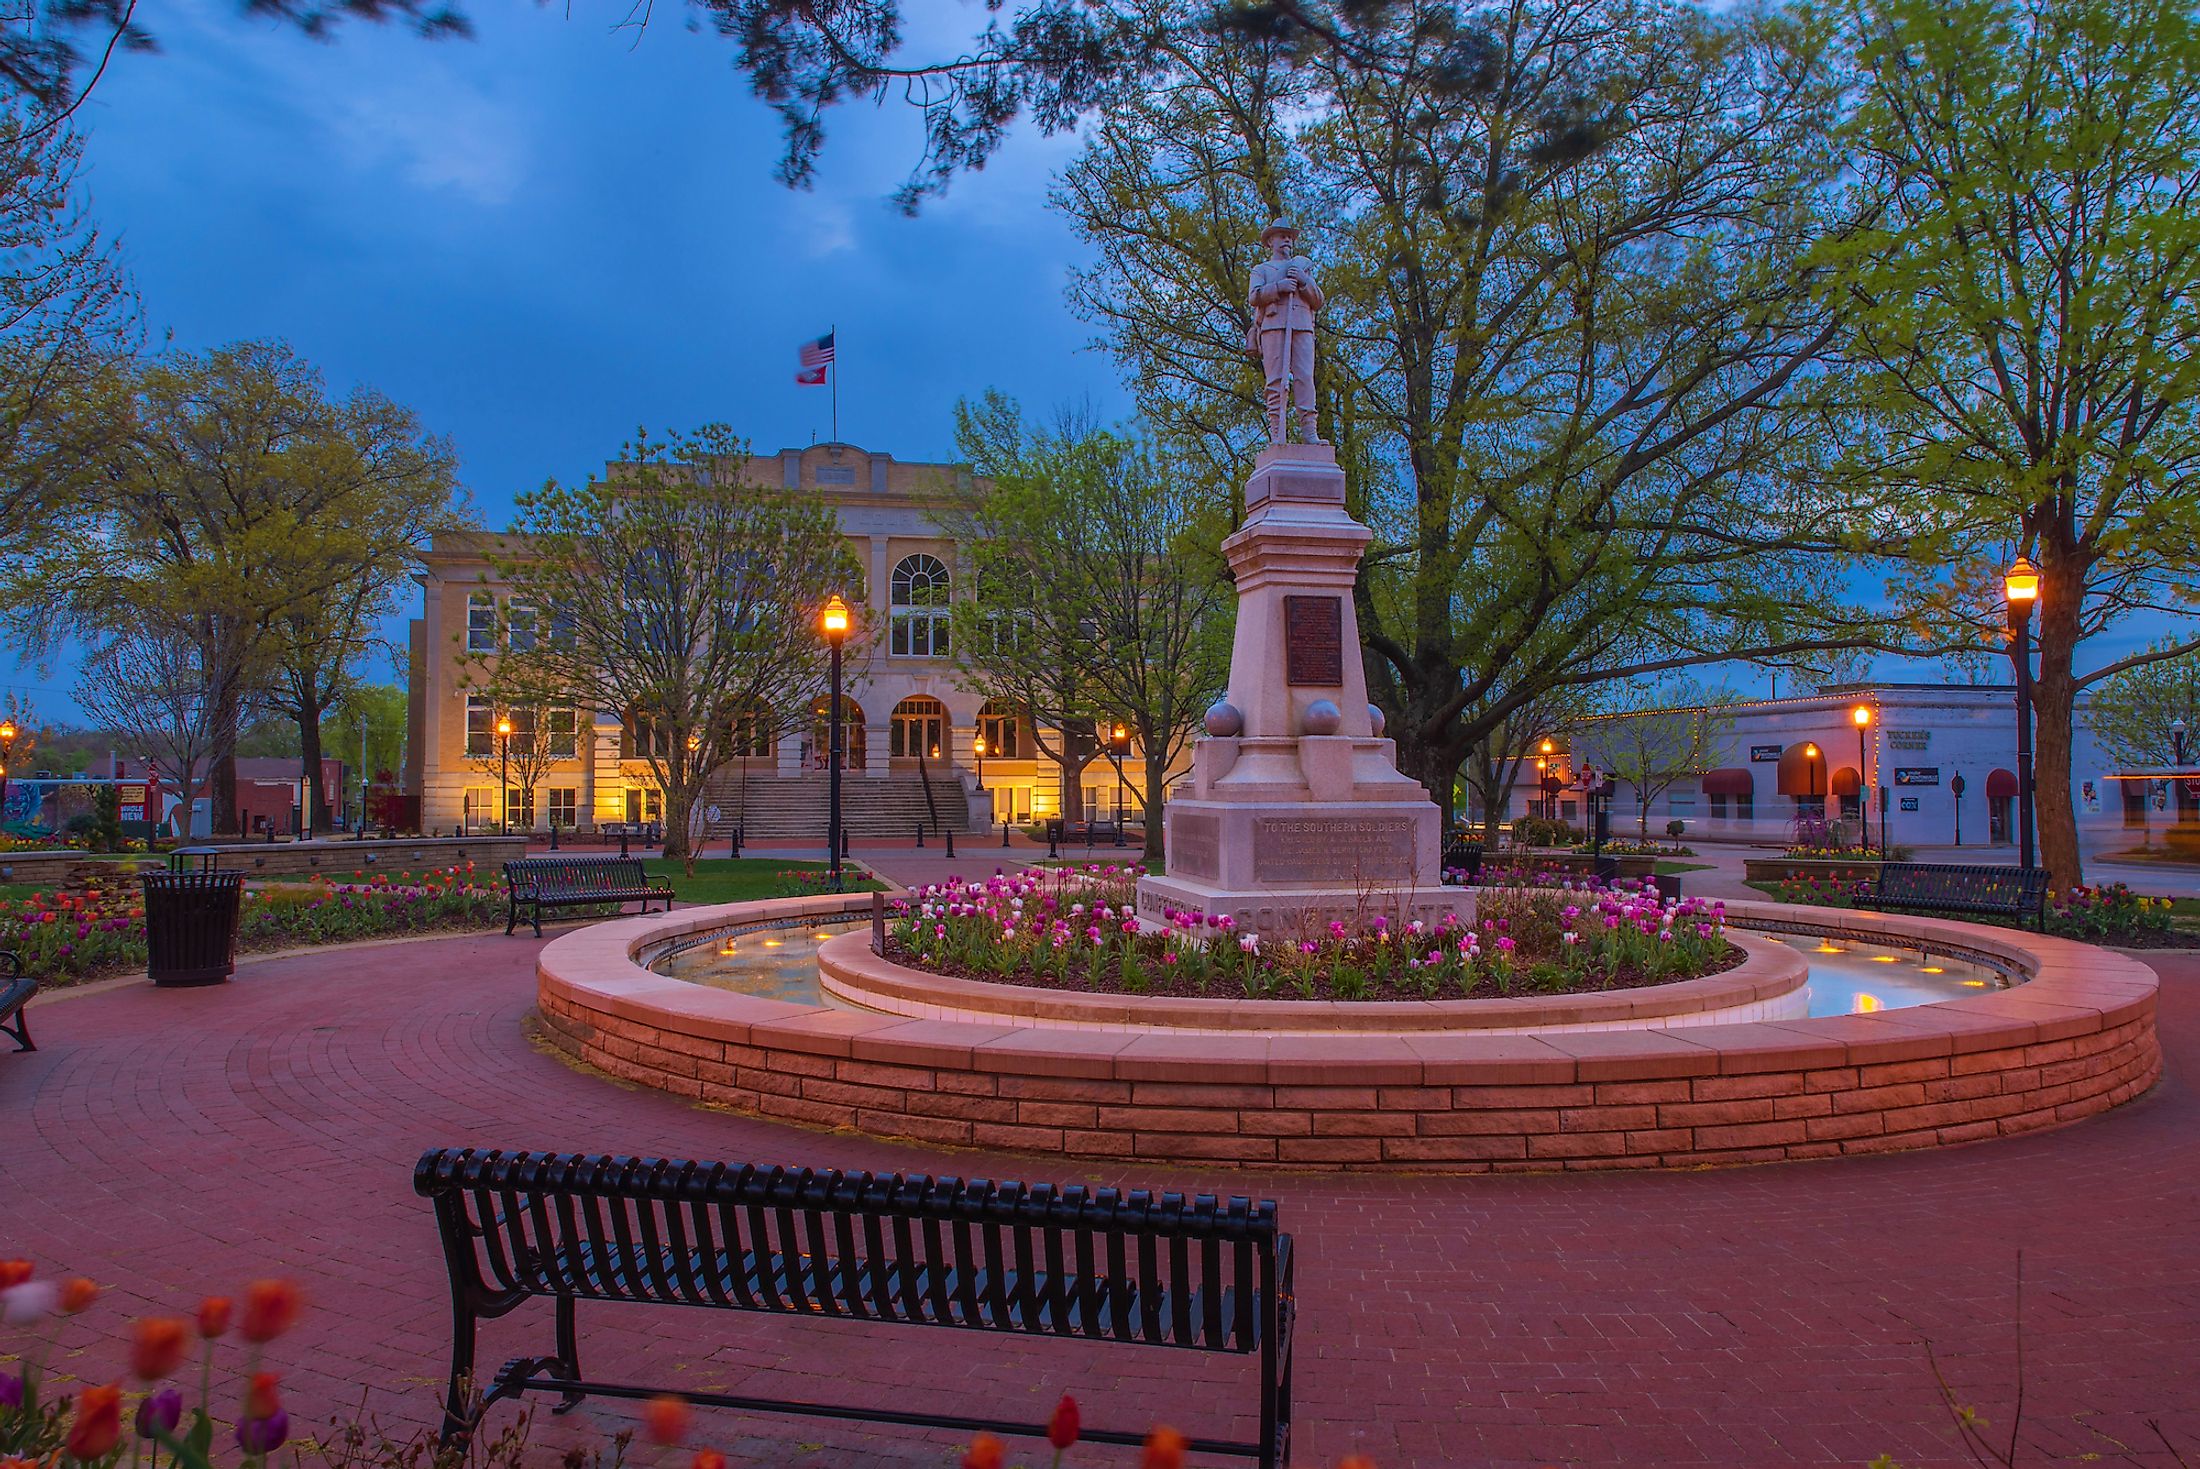 Civil War Memorial statue in Bentonville, Arkansas. Editorial credit: RozenskiP / Shutterstock.com